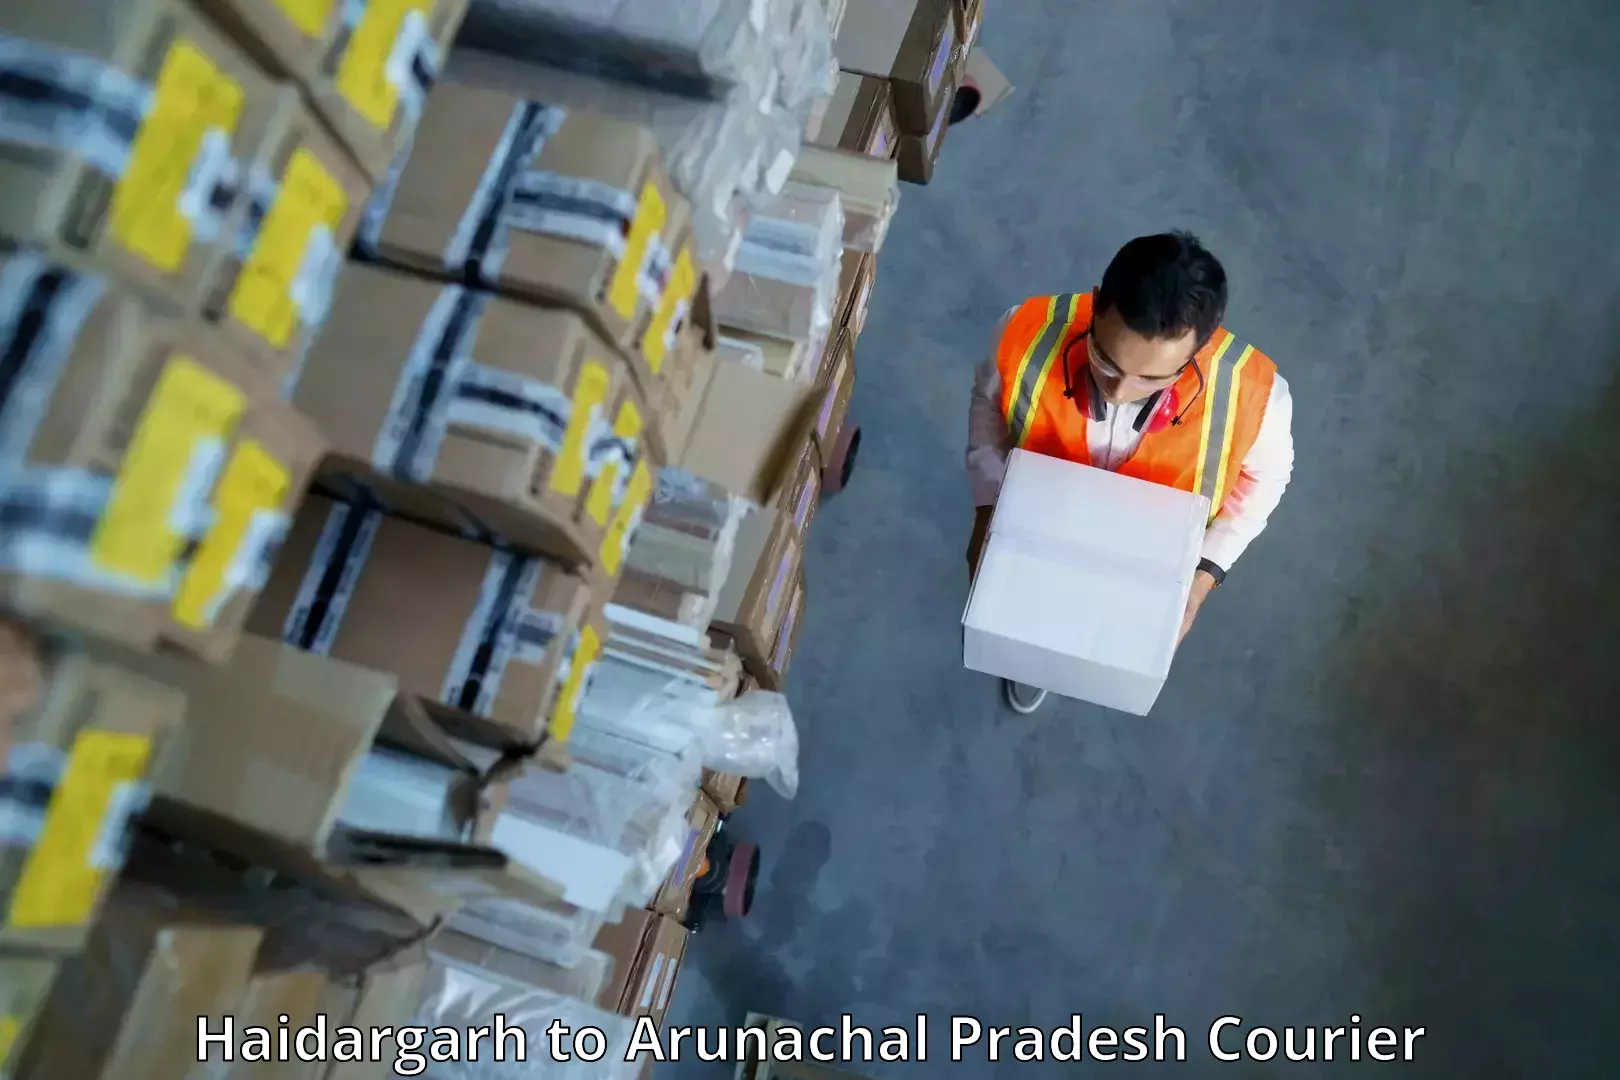 High-performance logistics Haidargarh to Arunachal Pradesh